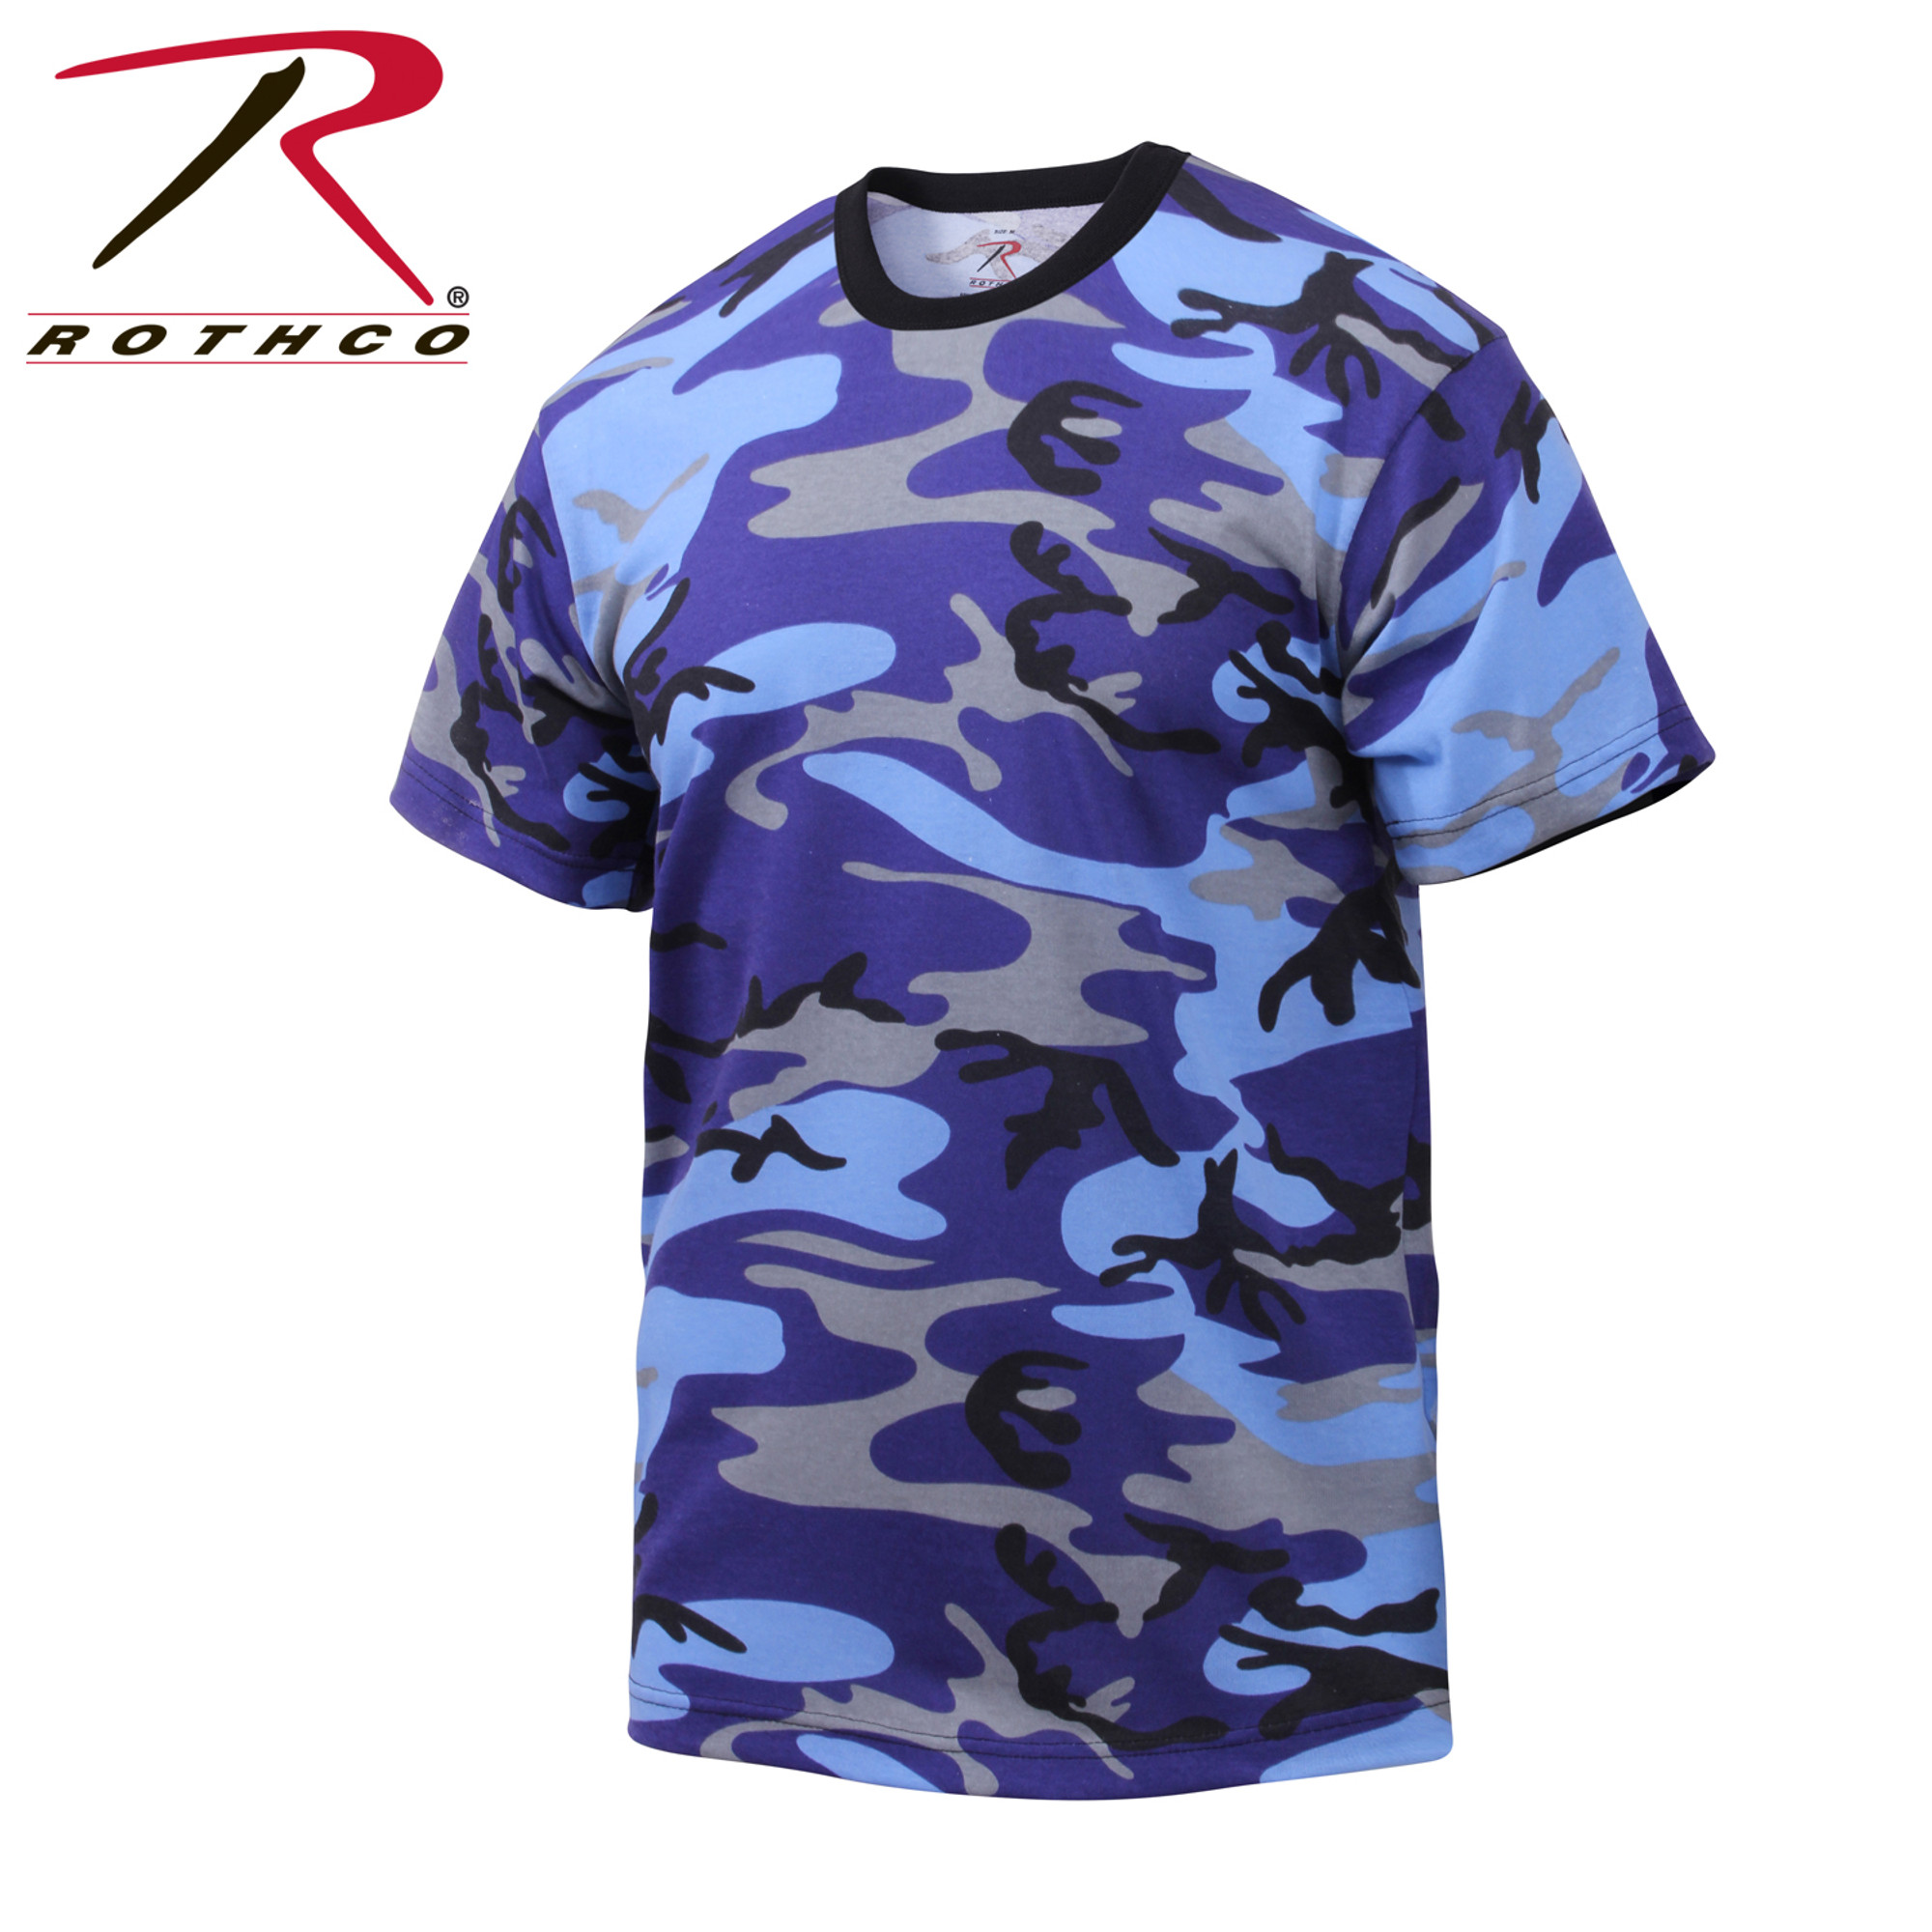 Rothco Color Camo T-Shirts - Electric Blue